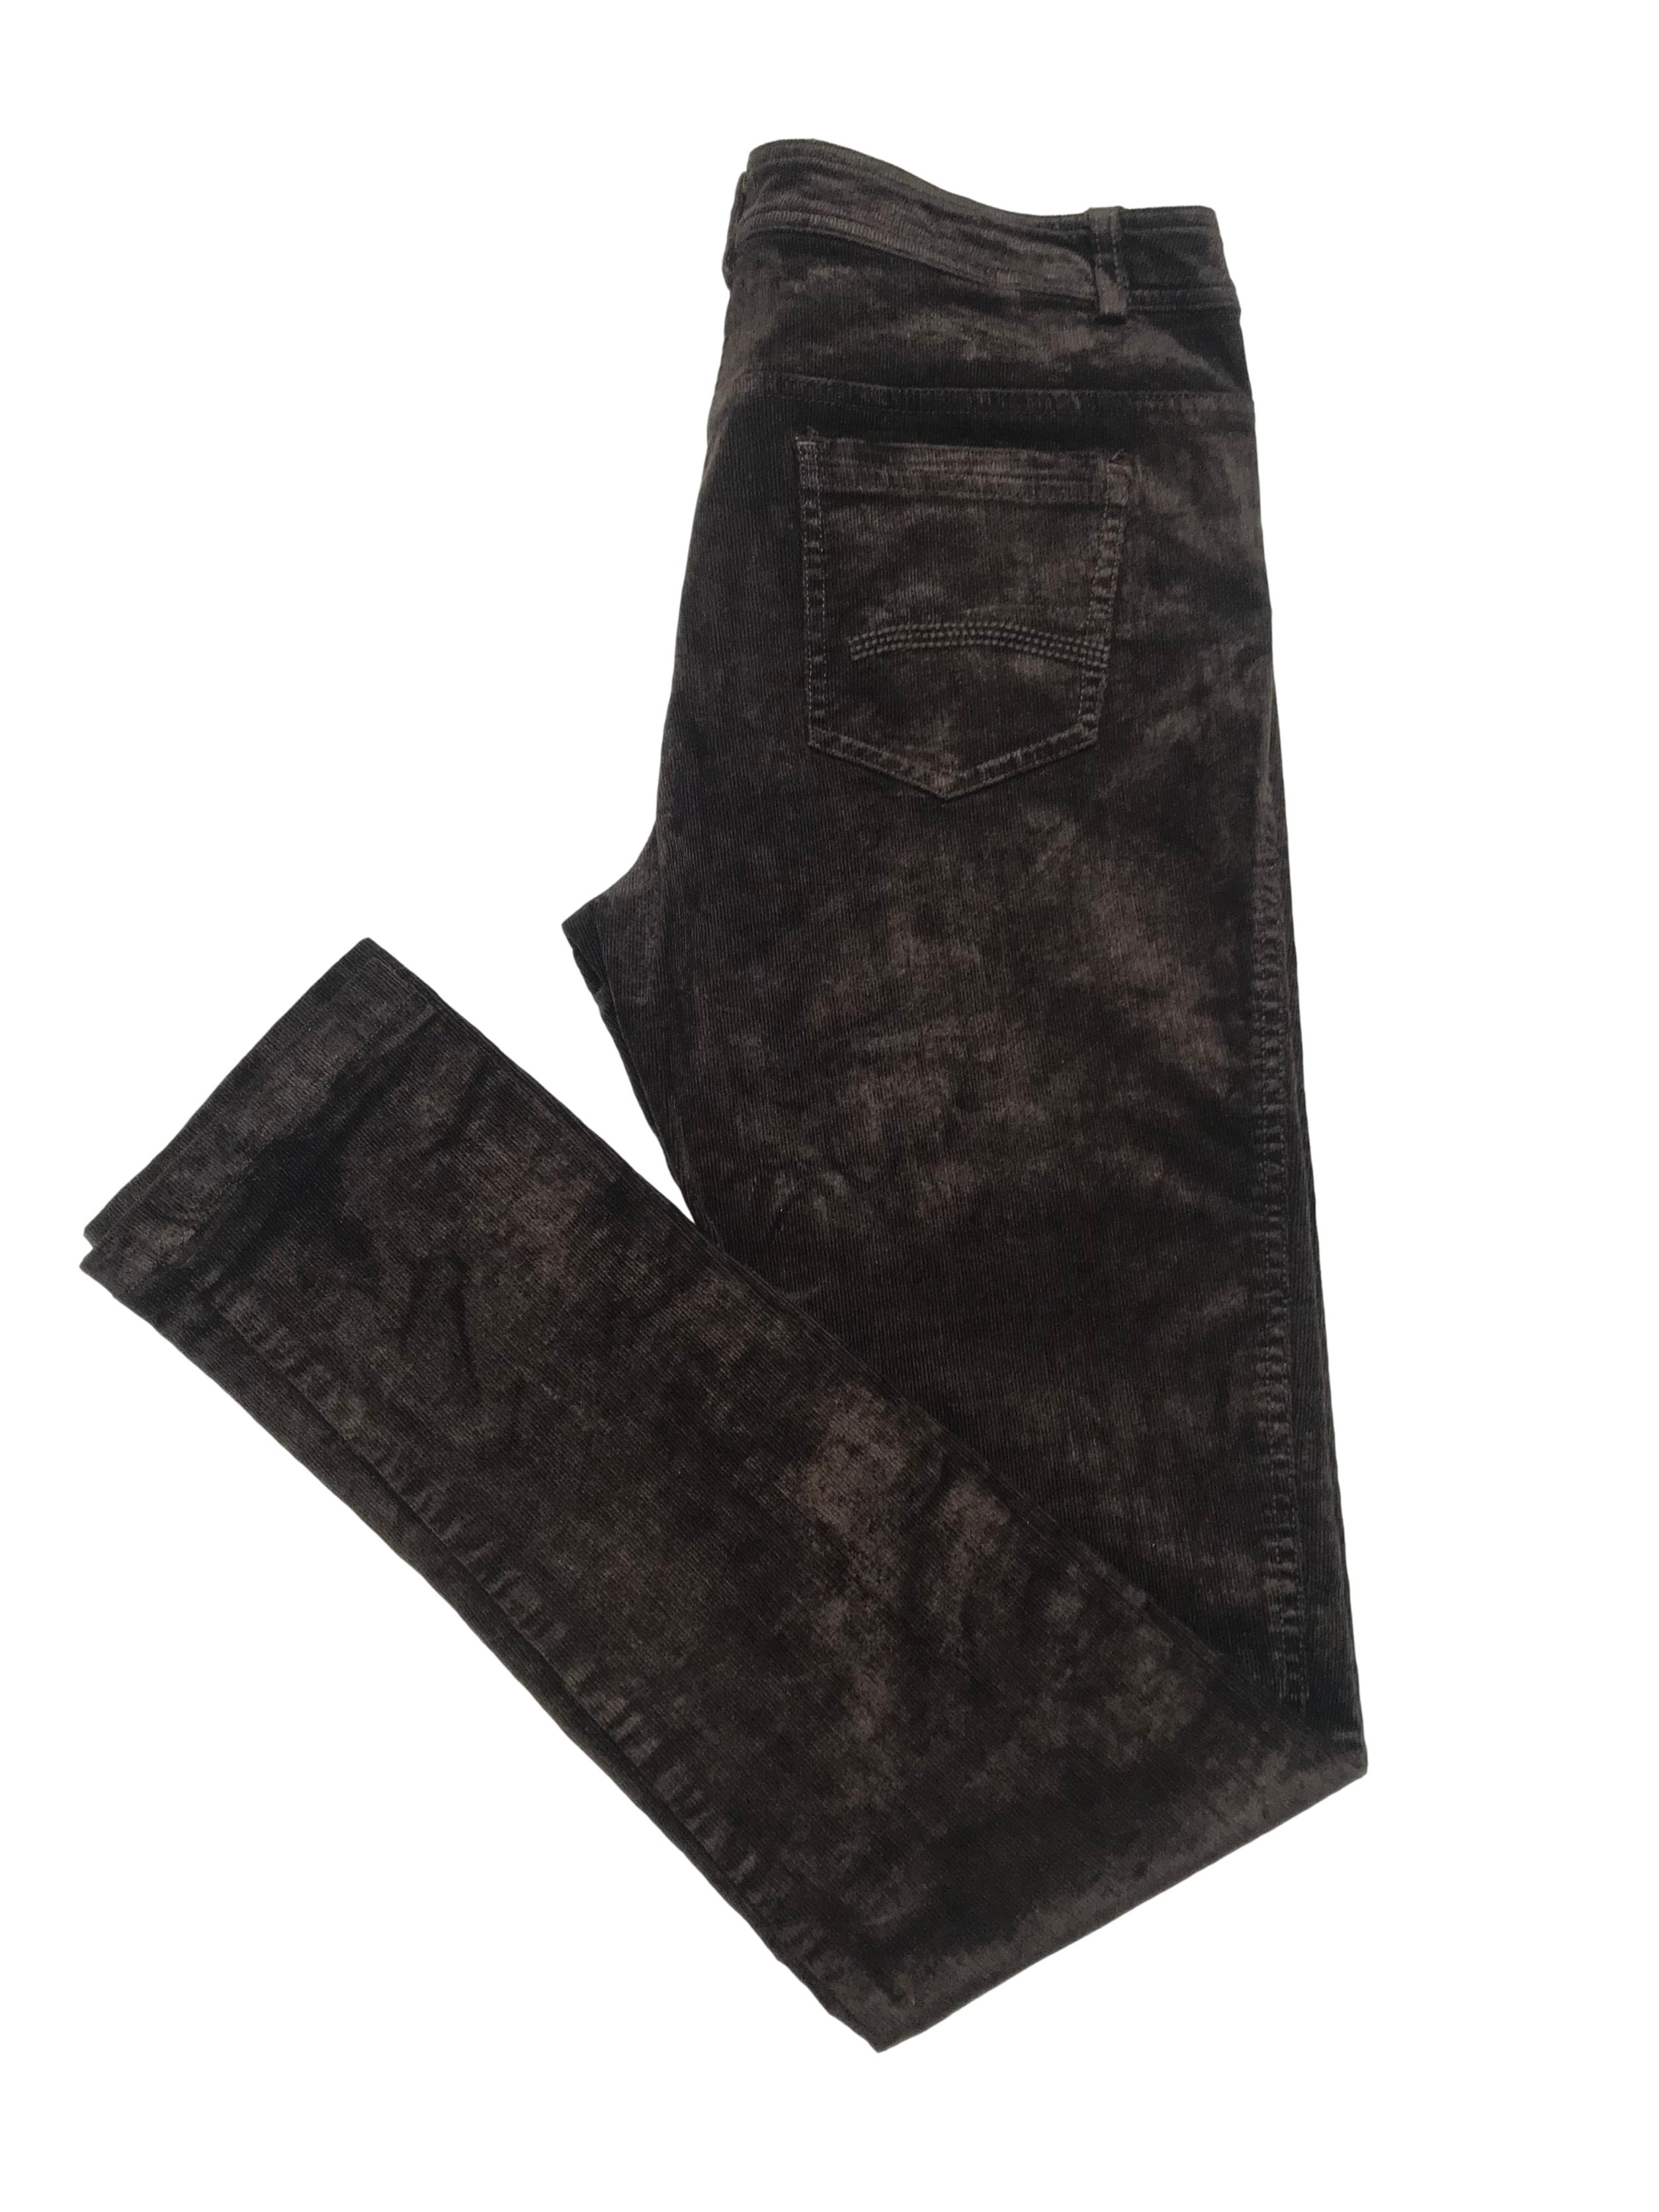 Pantalón Basement de corduroy marrón satinado, corte pitillo. Pretina 80cm